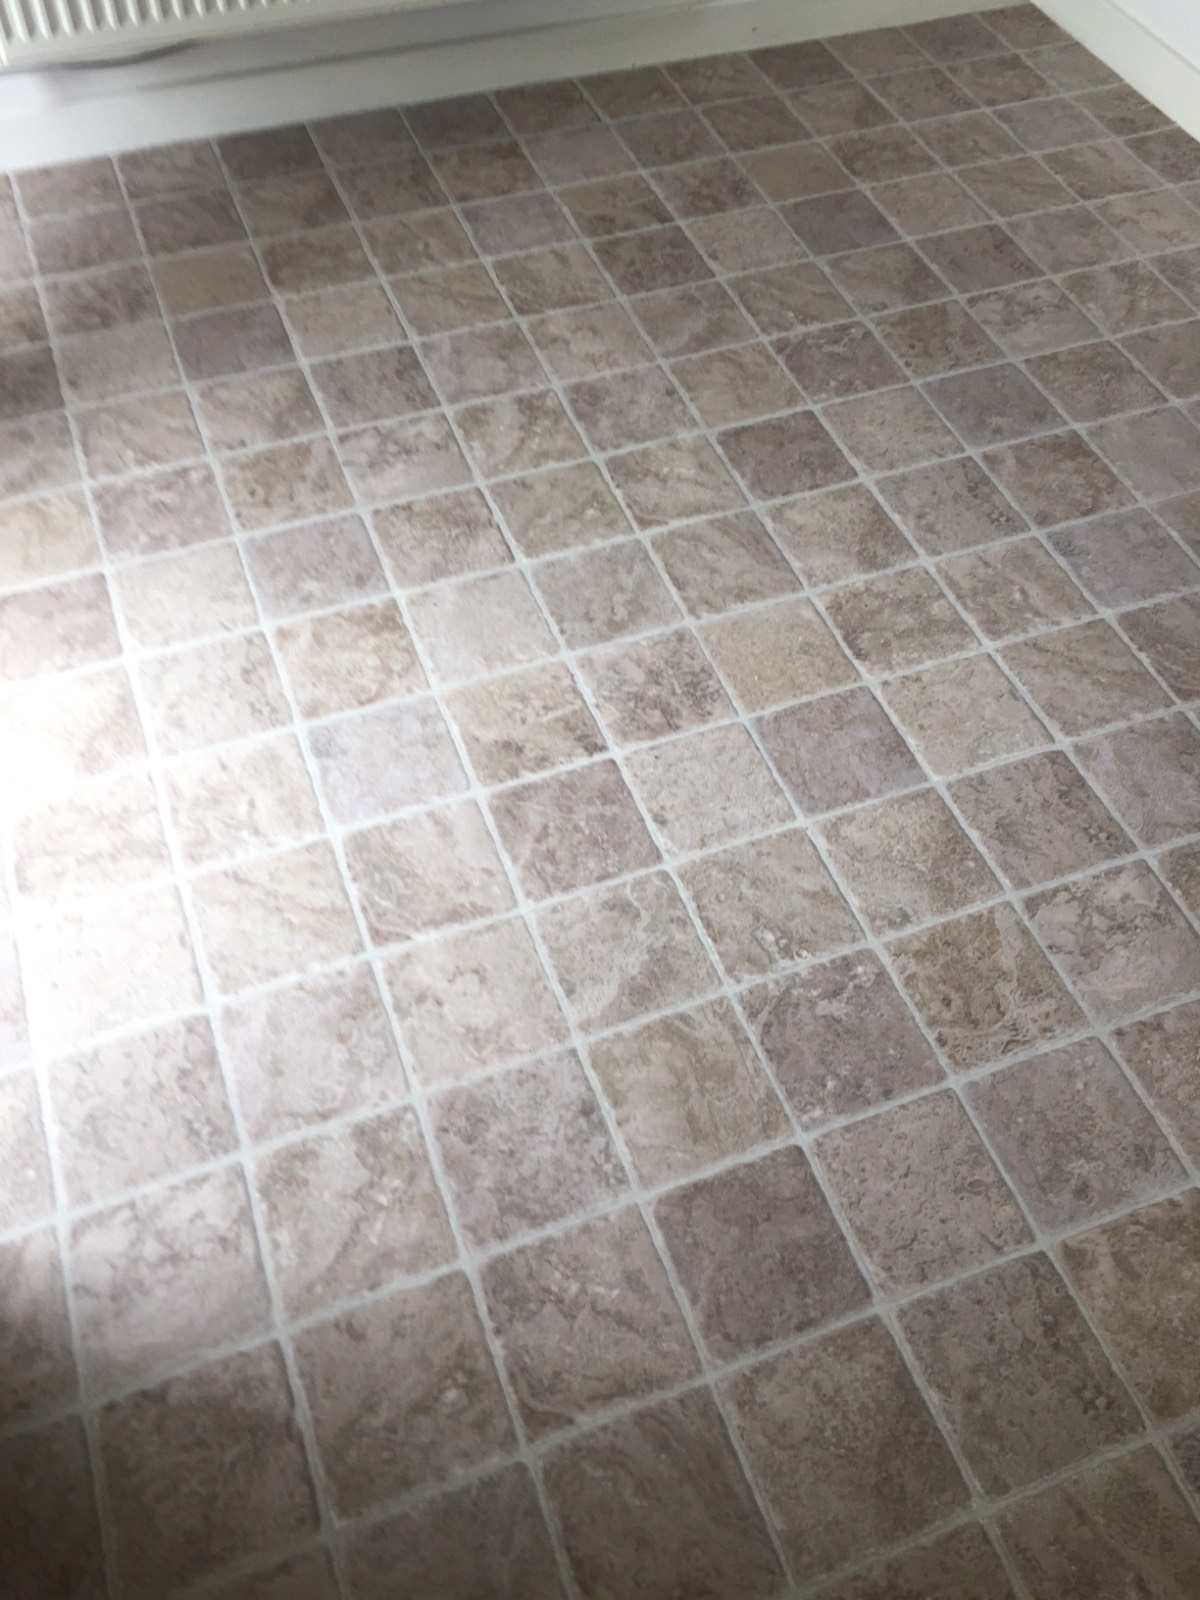 light brown vinyl flooring with tile design in kitchen 